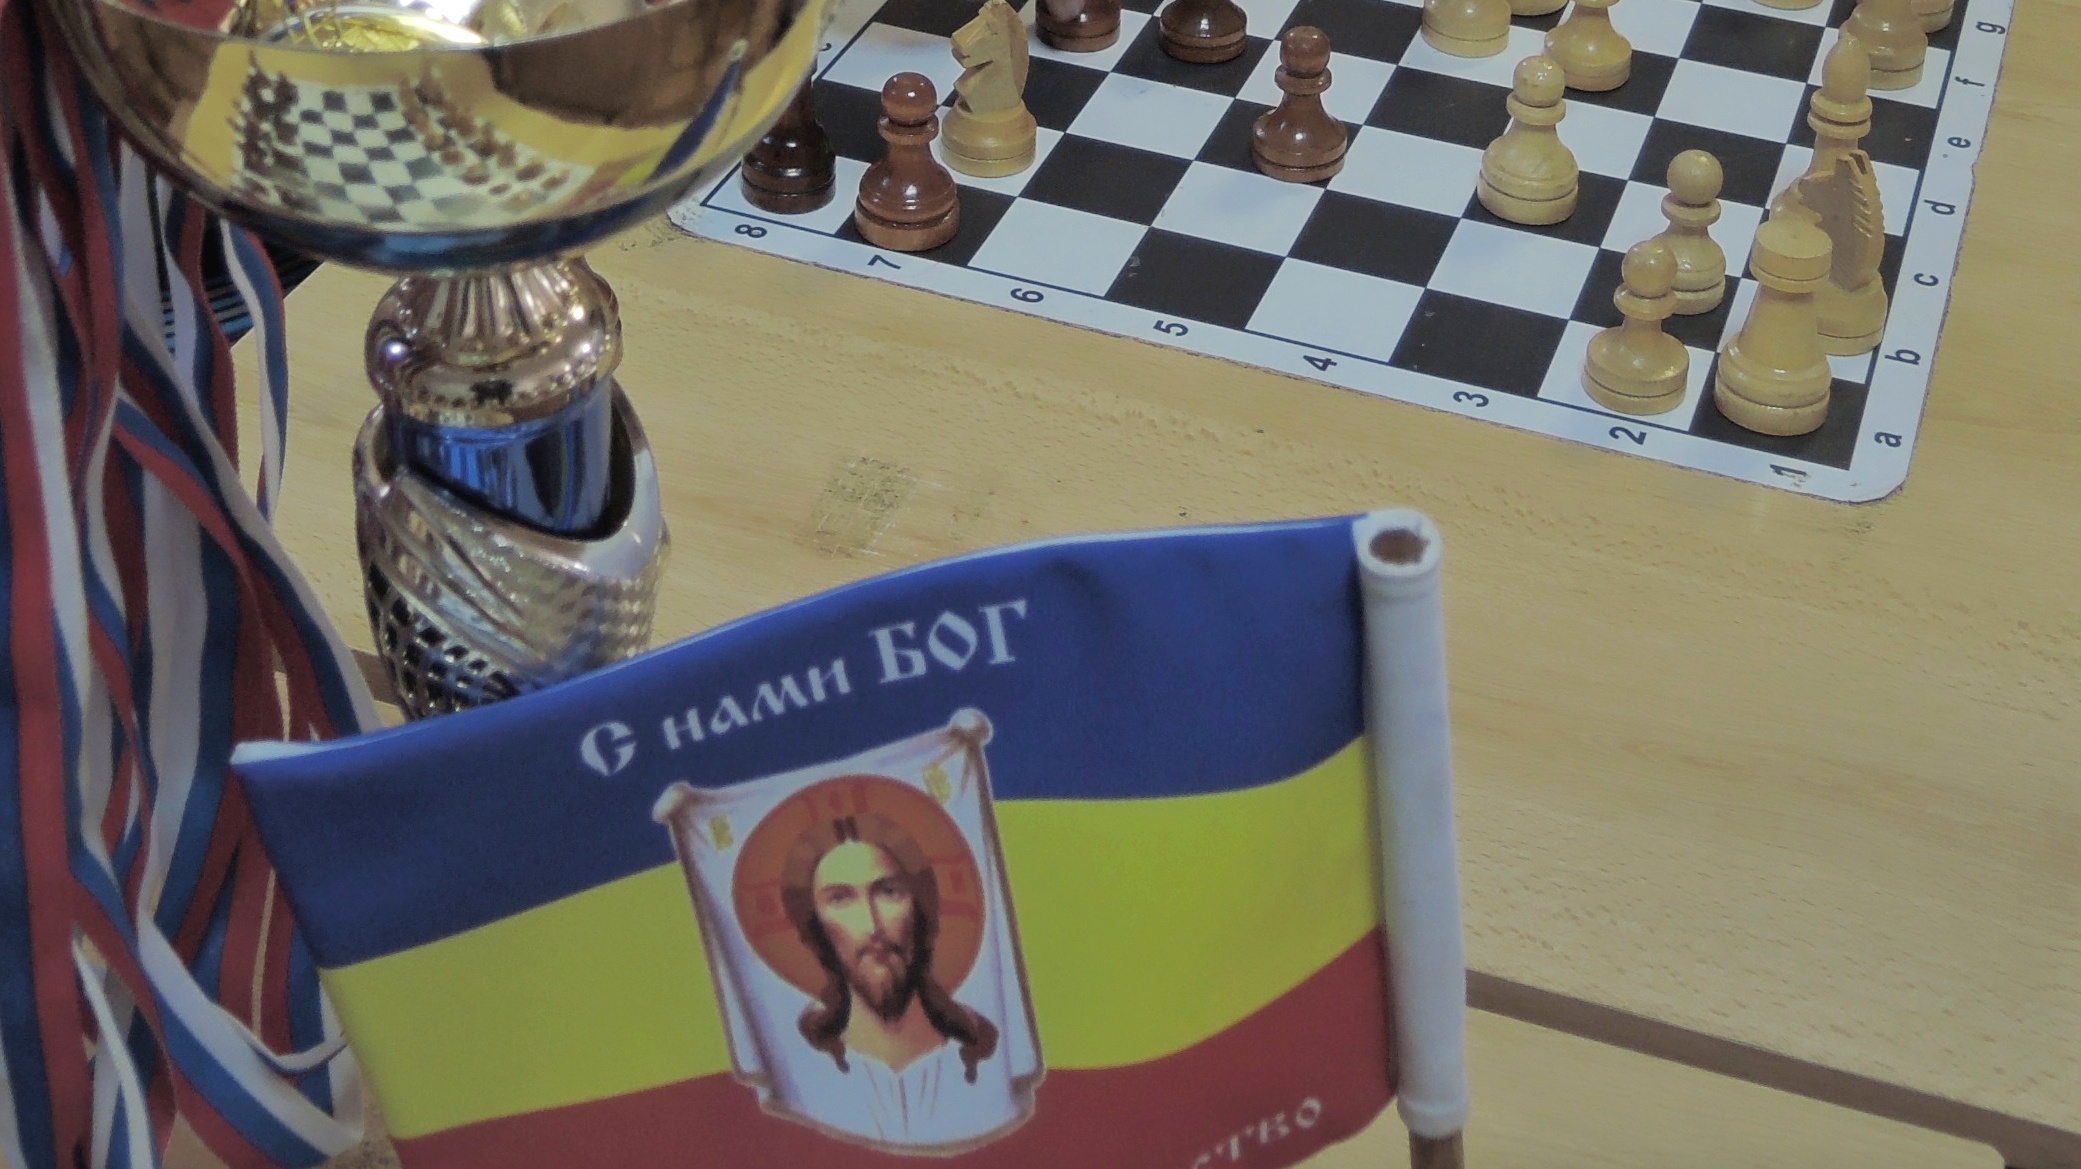 Чесс резалтс шахматы россия